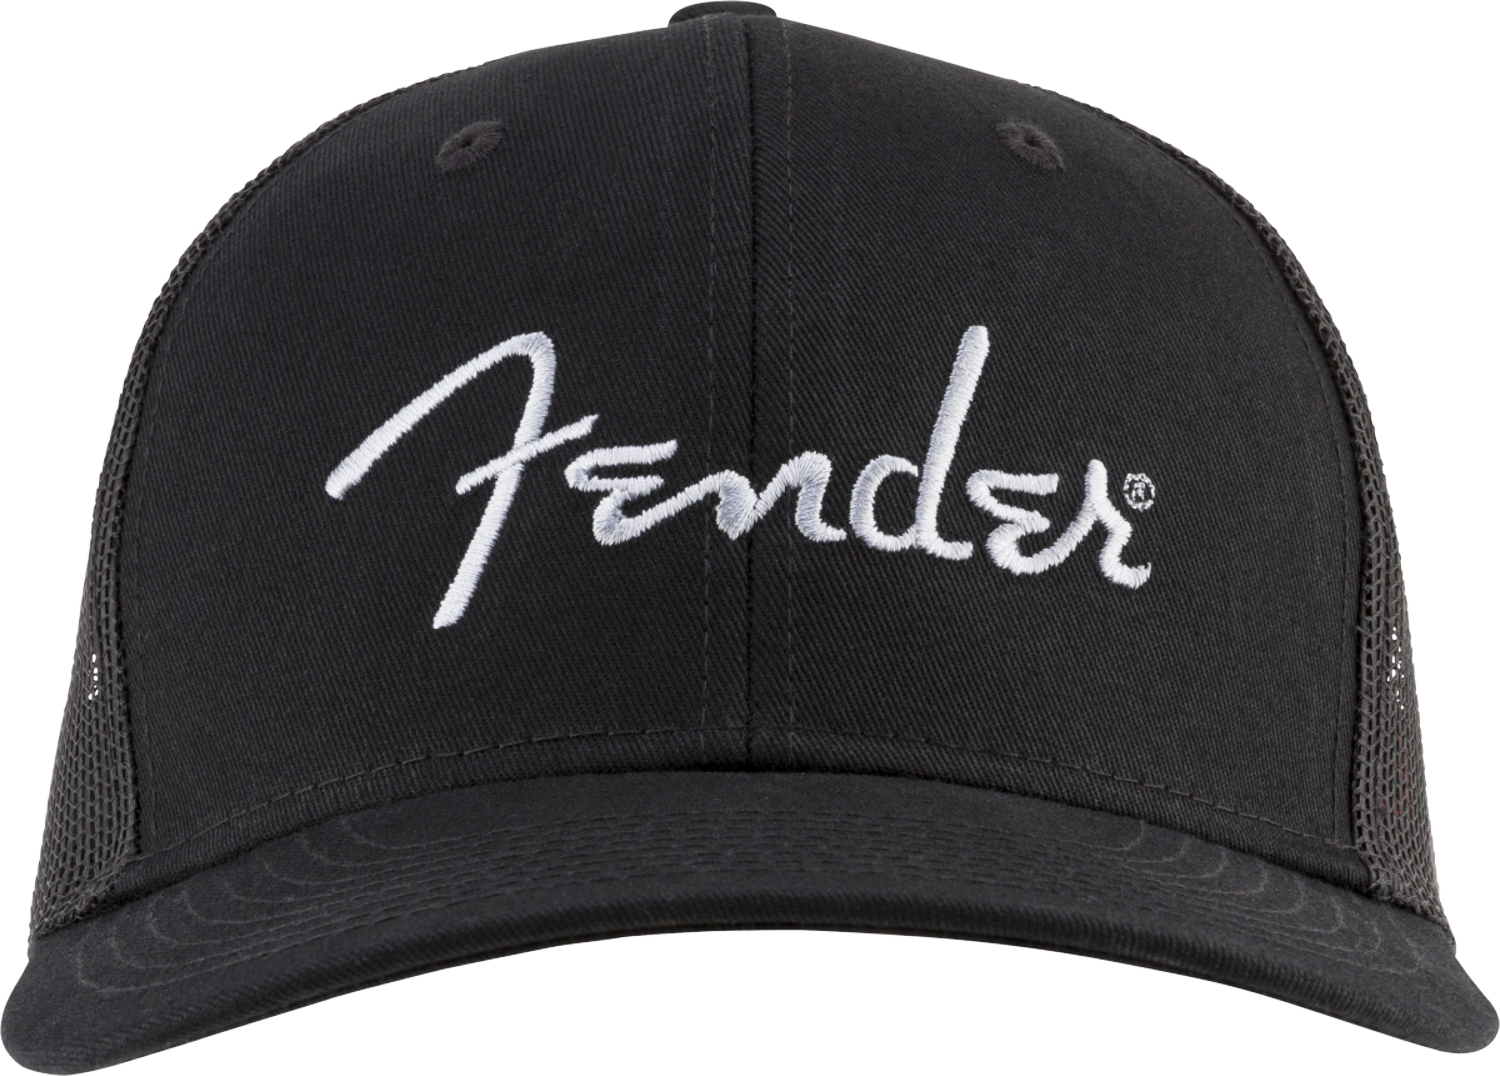 Fender® Silver Thread Logo Snapback Trucker Hat, Black, One Size Fits Most追加画像